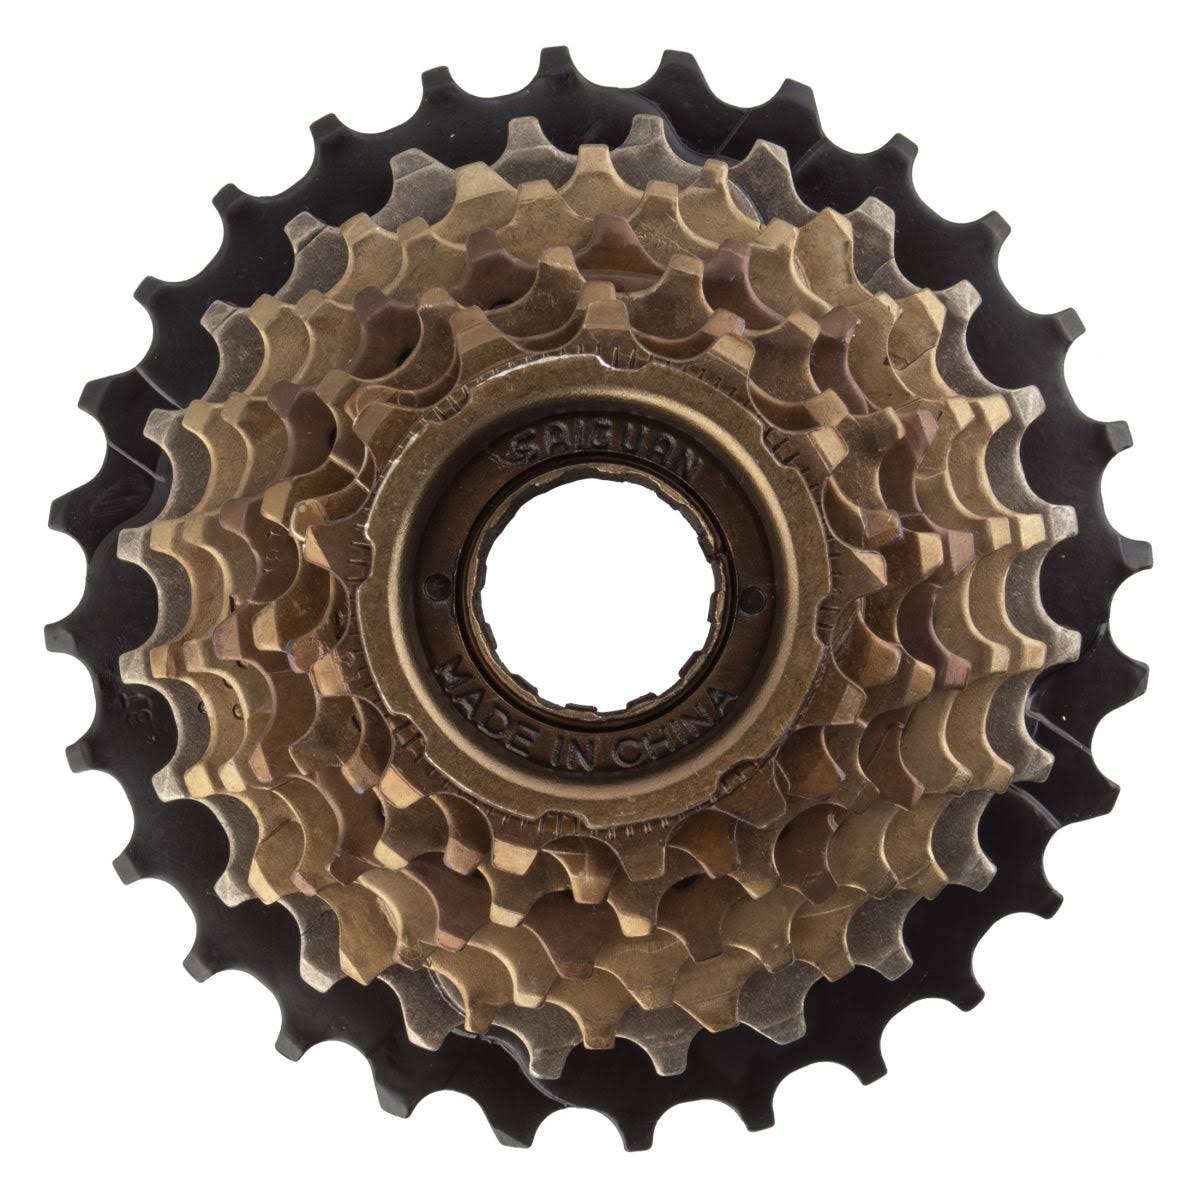 Sunlite UtiliT Sport 7sp Freewheel, 14-28t, Brown/Black